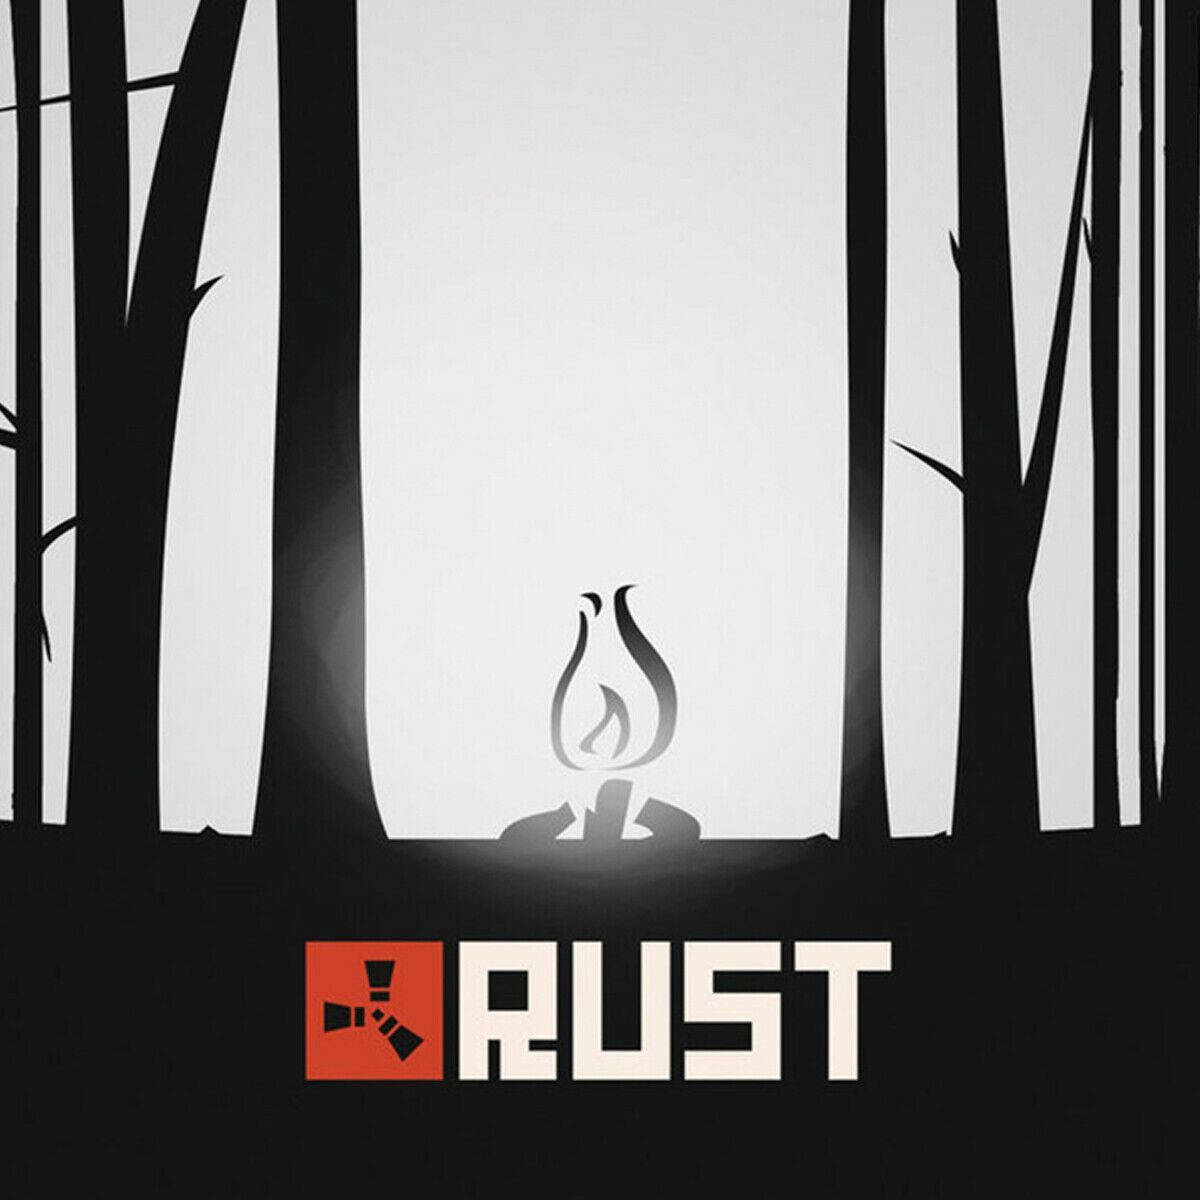 Video Games: Rust #videogames #videogame #video #game #games #rust